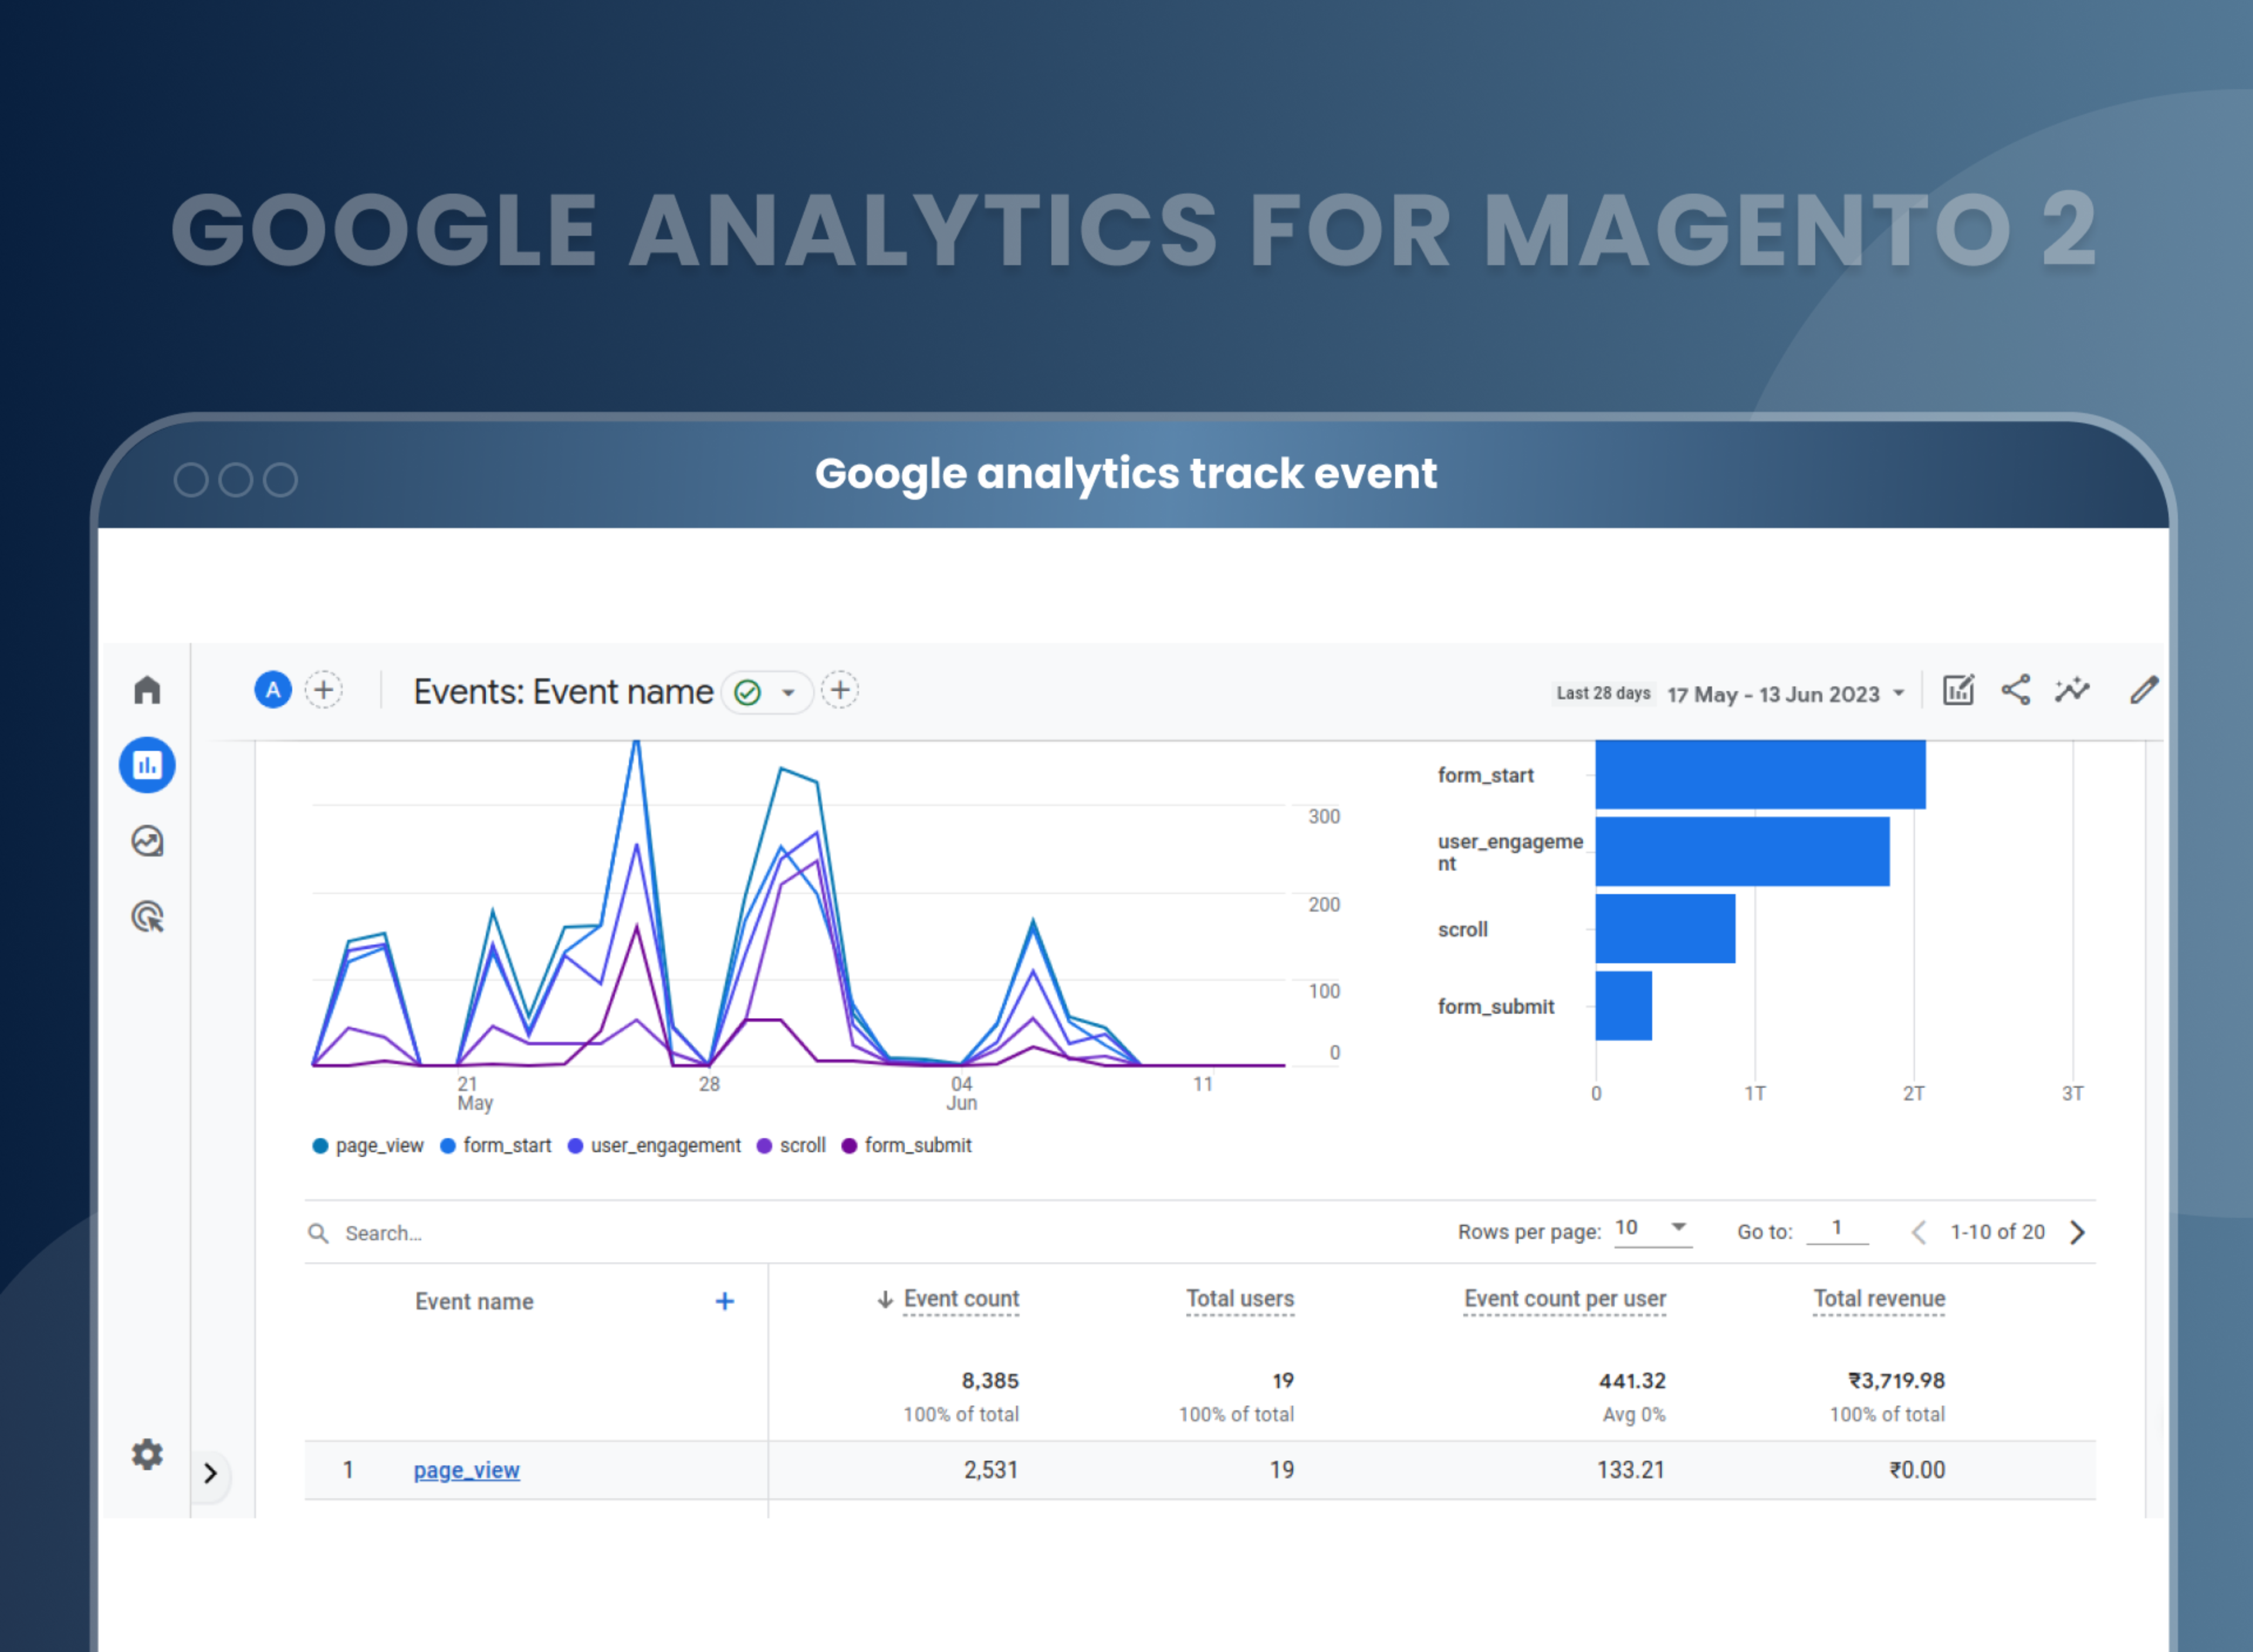 Google analytics Track event